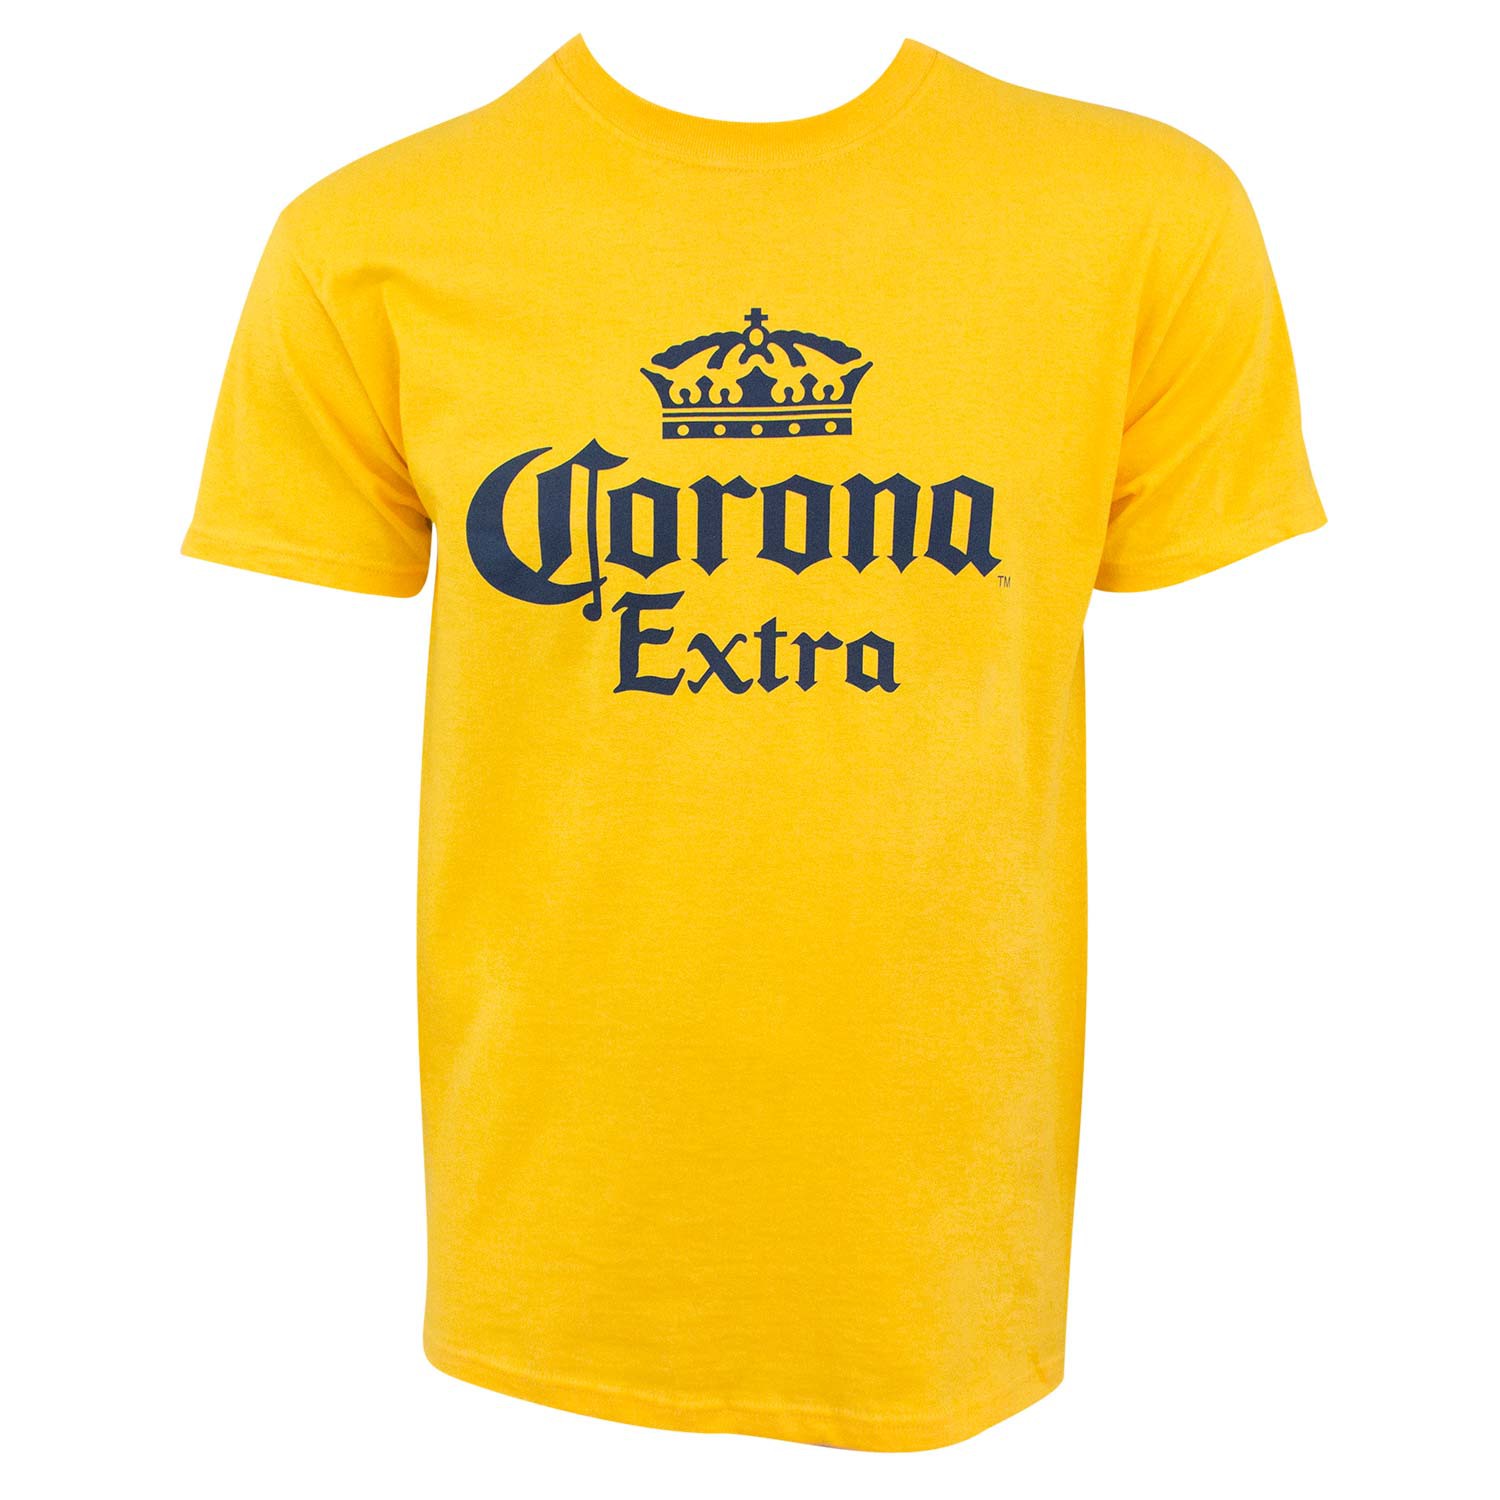 Corona Extra Logo Yellow Men's T-Shirt